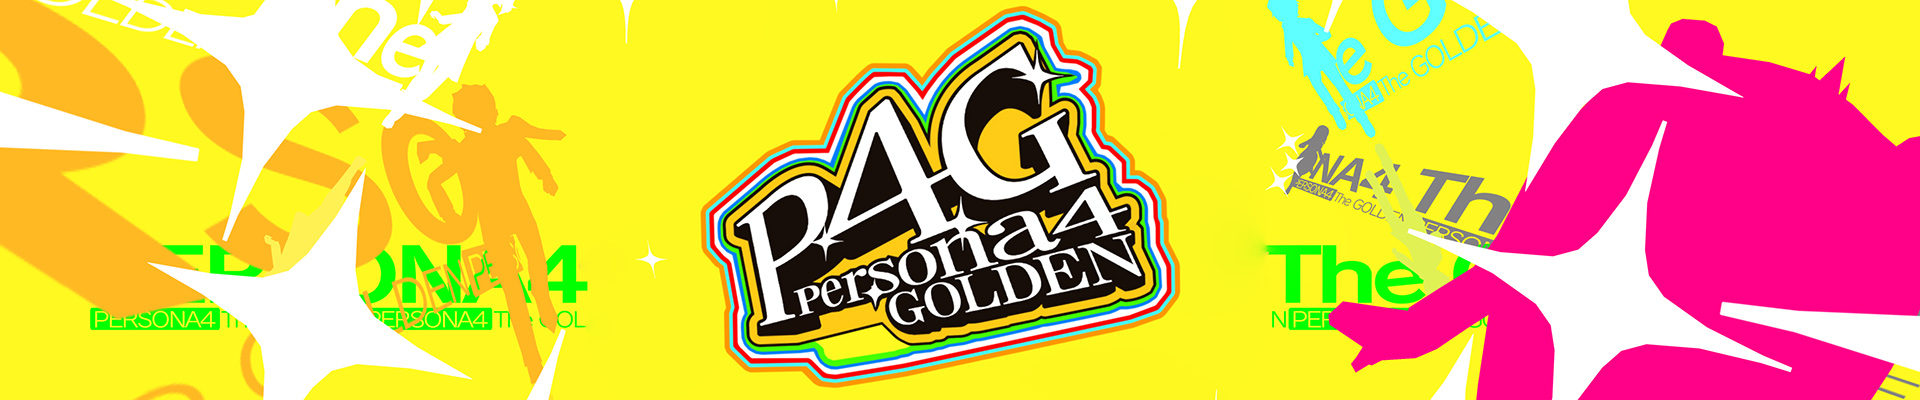 Радуясь: Persona 4 Golden